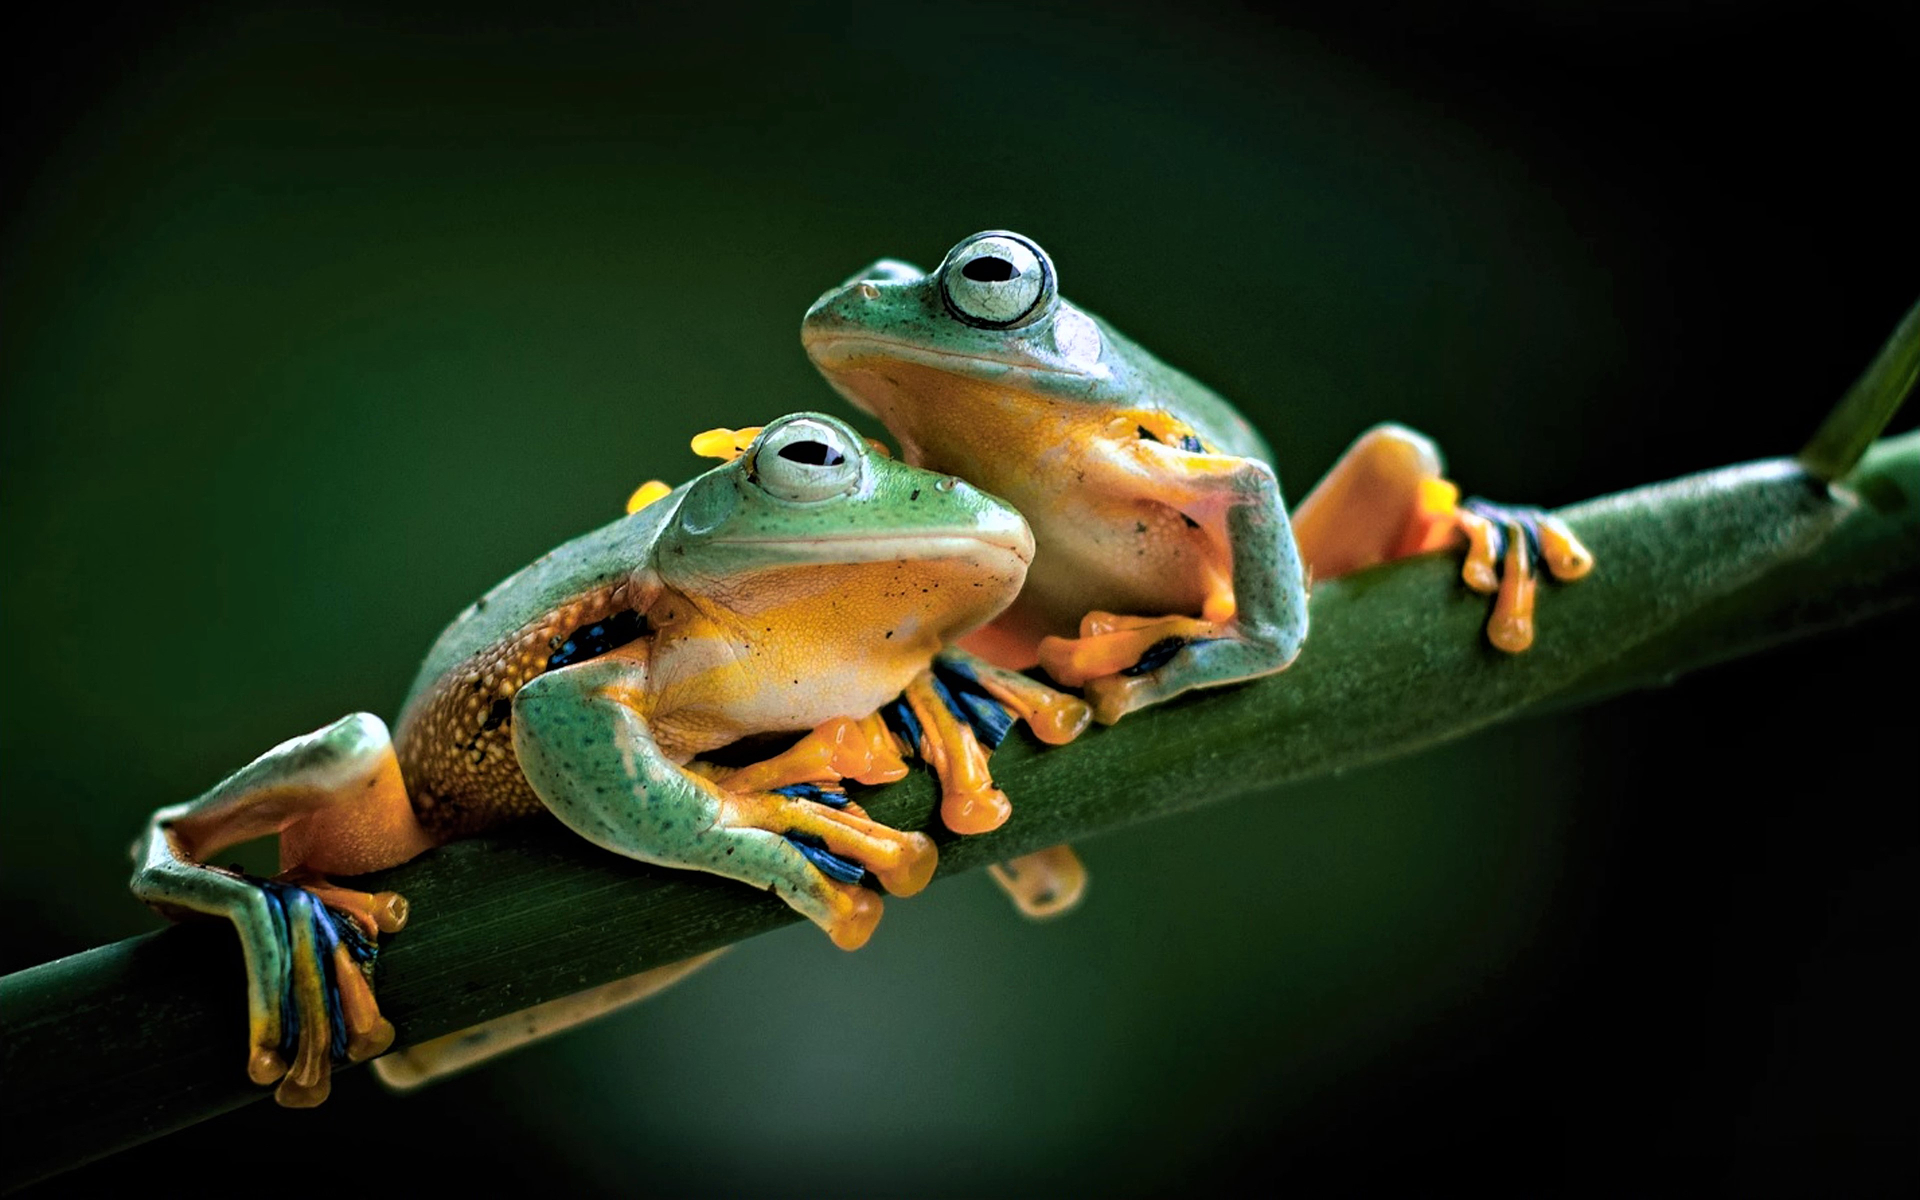 Cute Frog Wallpaper Aesthetic  Kawaii Frog Wallpaper iPhone 